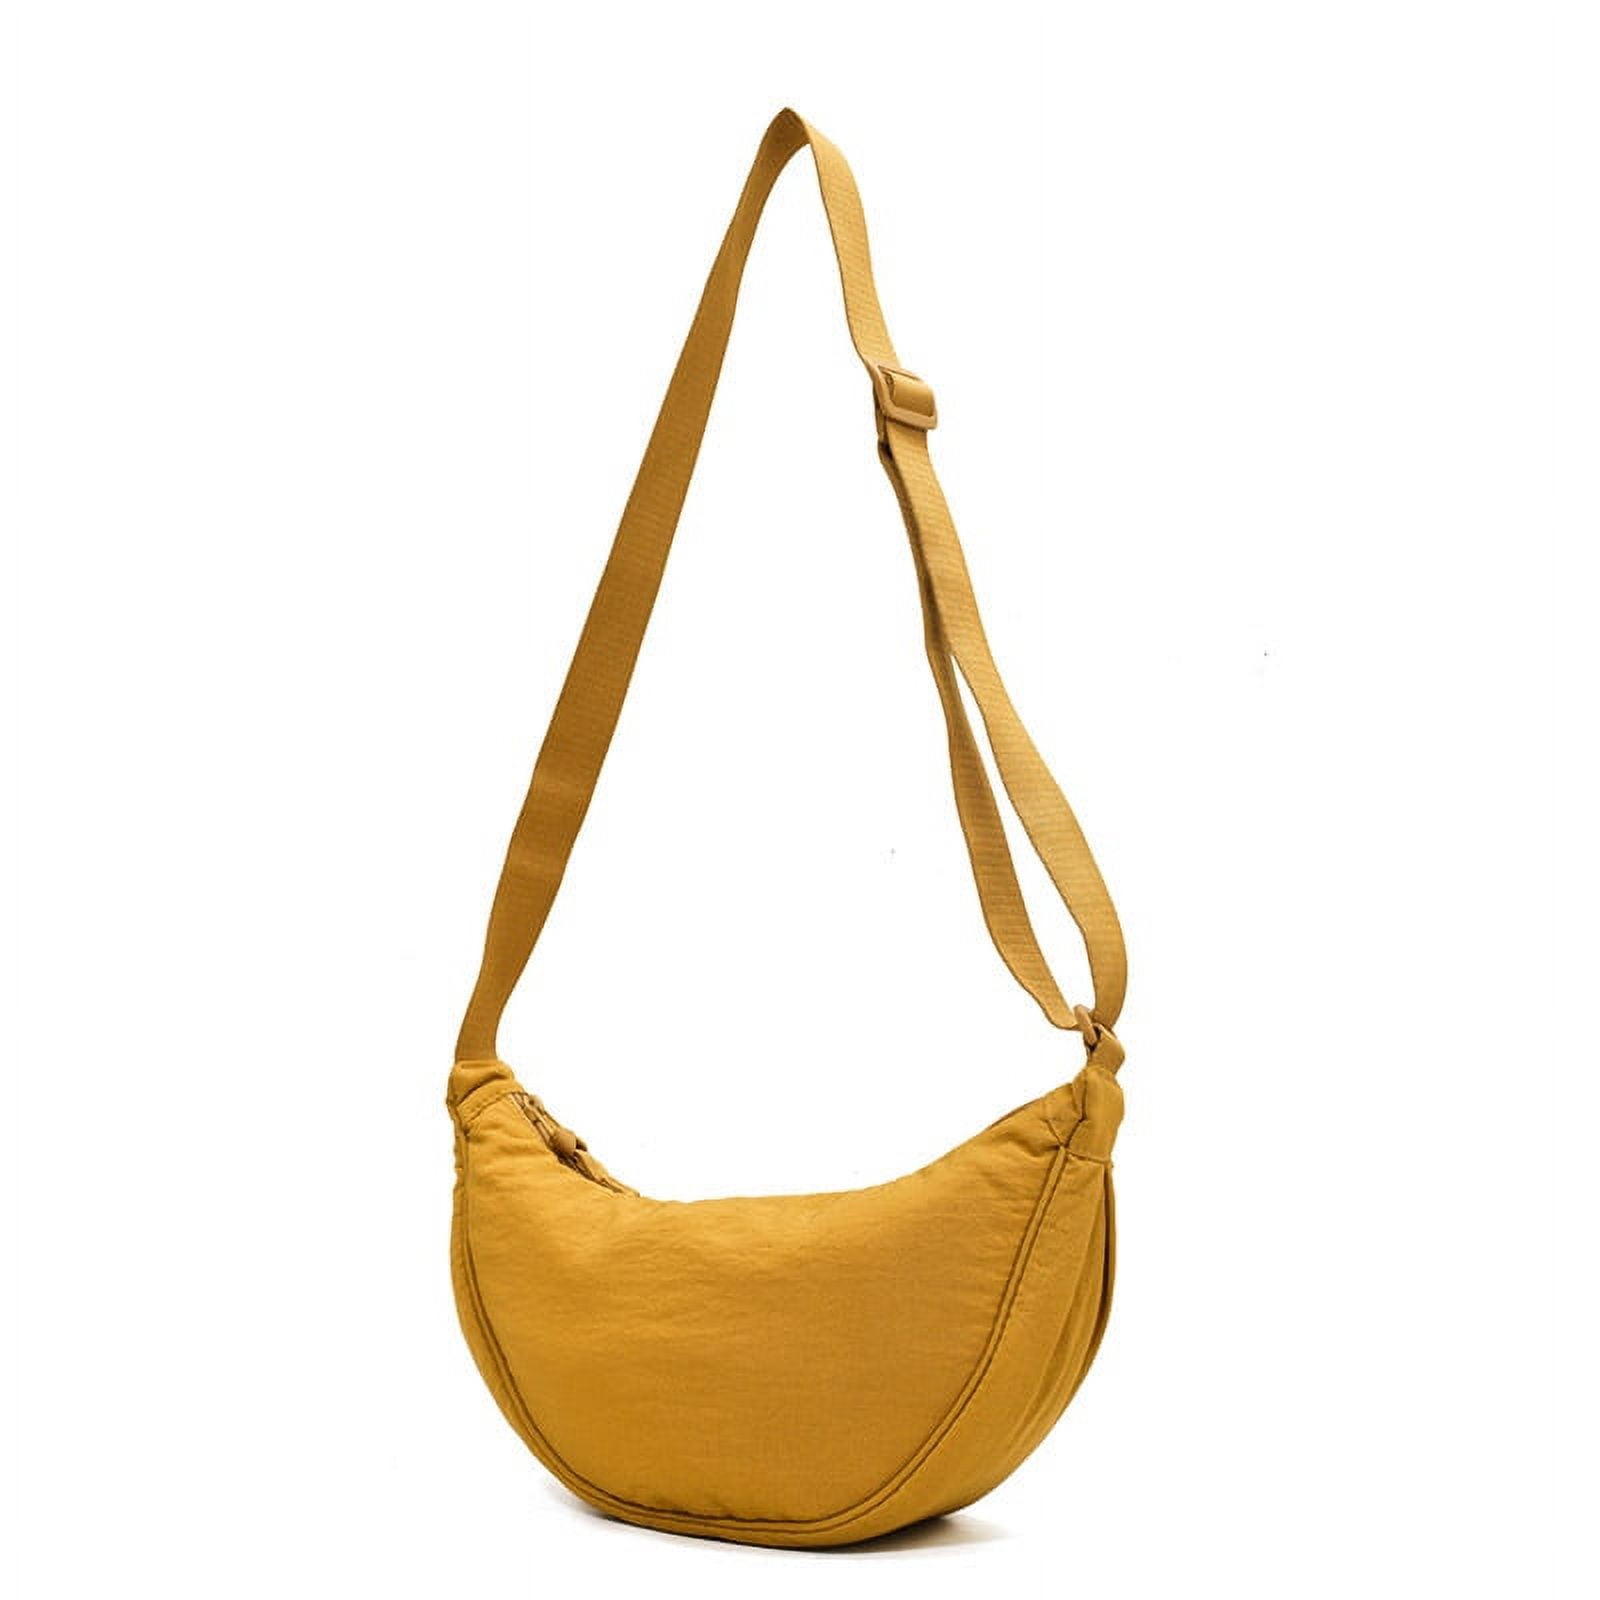 Xyer 1Pcs Great Craftsmanship Foldable Shoulder Bag Zipper Fresh Lemon Print Roomy Shopping Pouch for Dating, Women's, Size: Large, Yellow